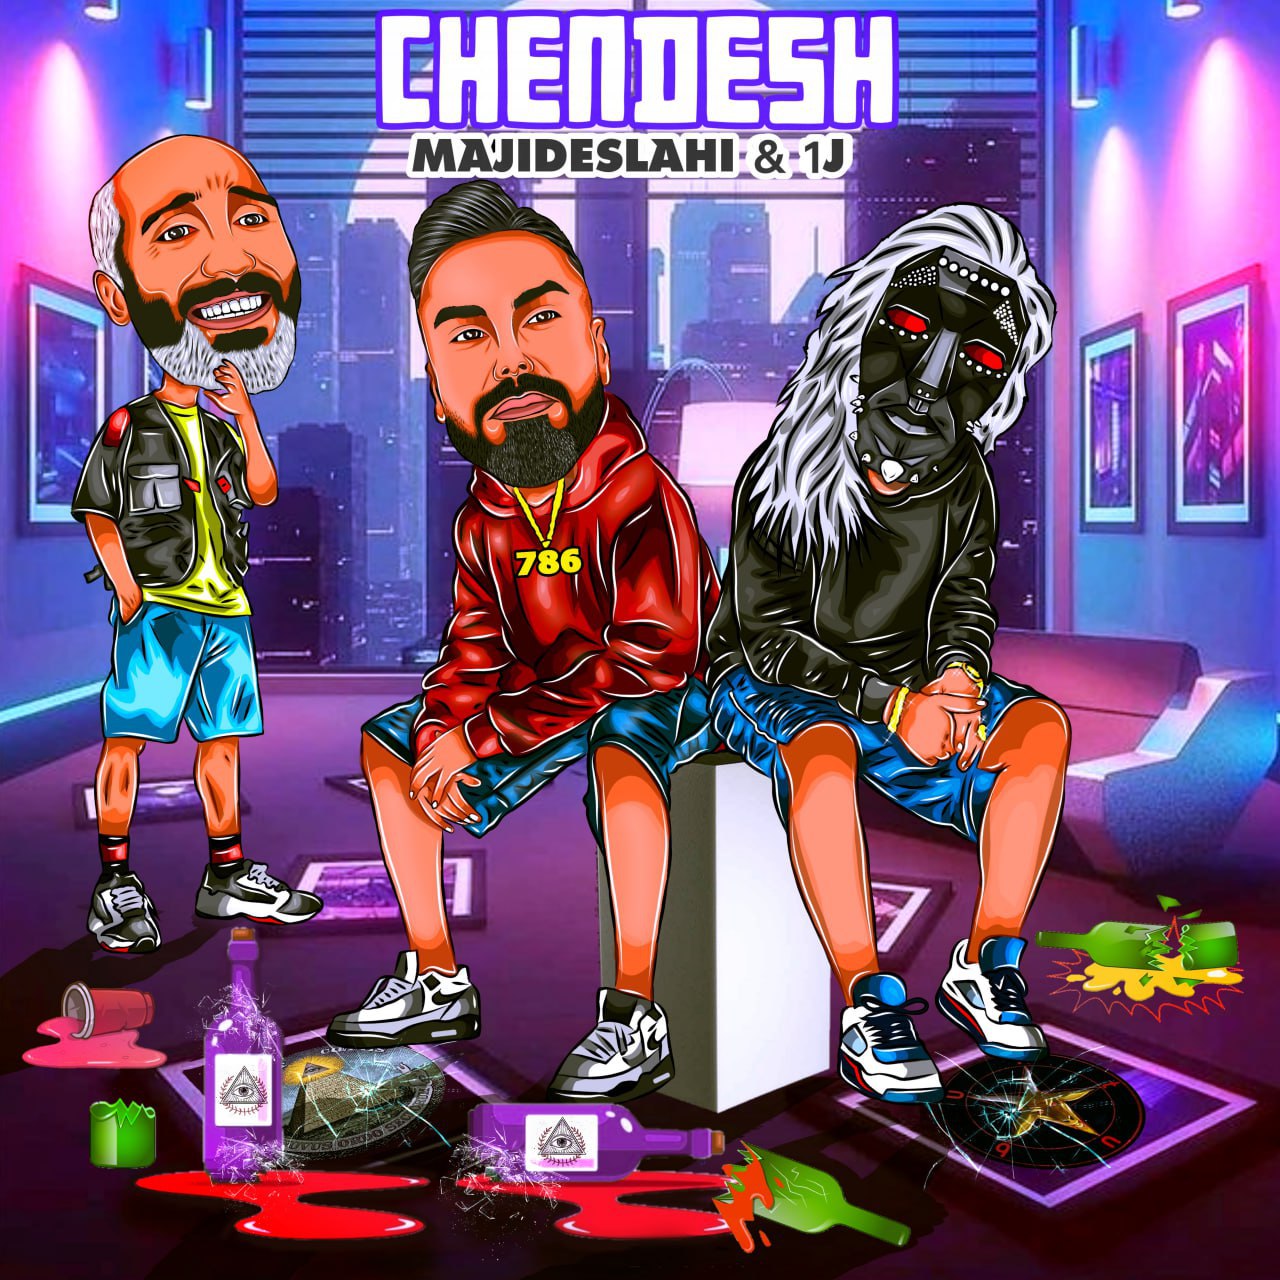 New Music From Majid Eslahi Called Chendesh